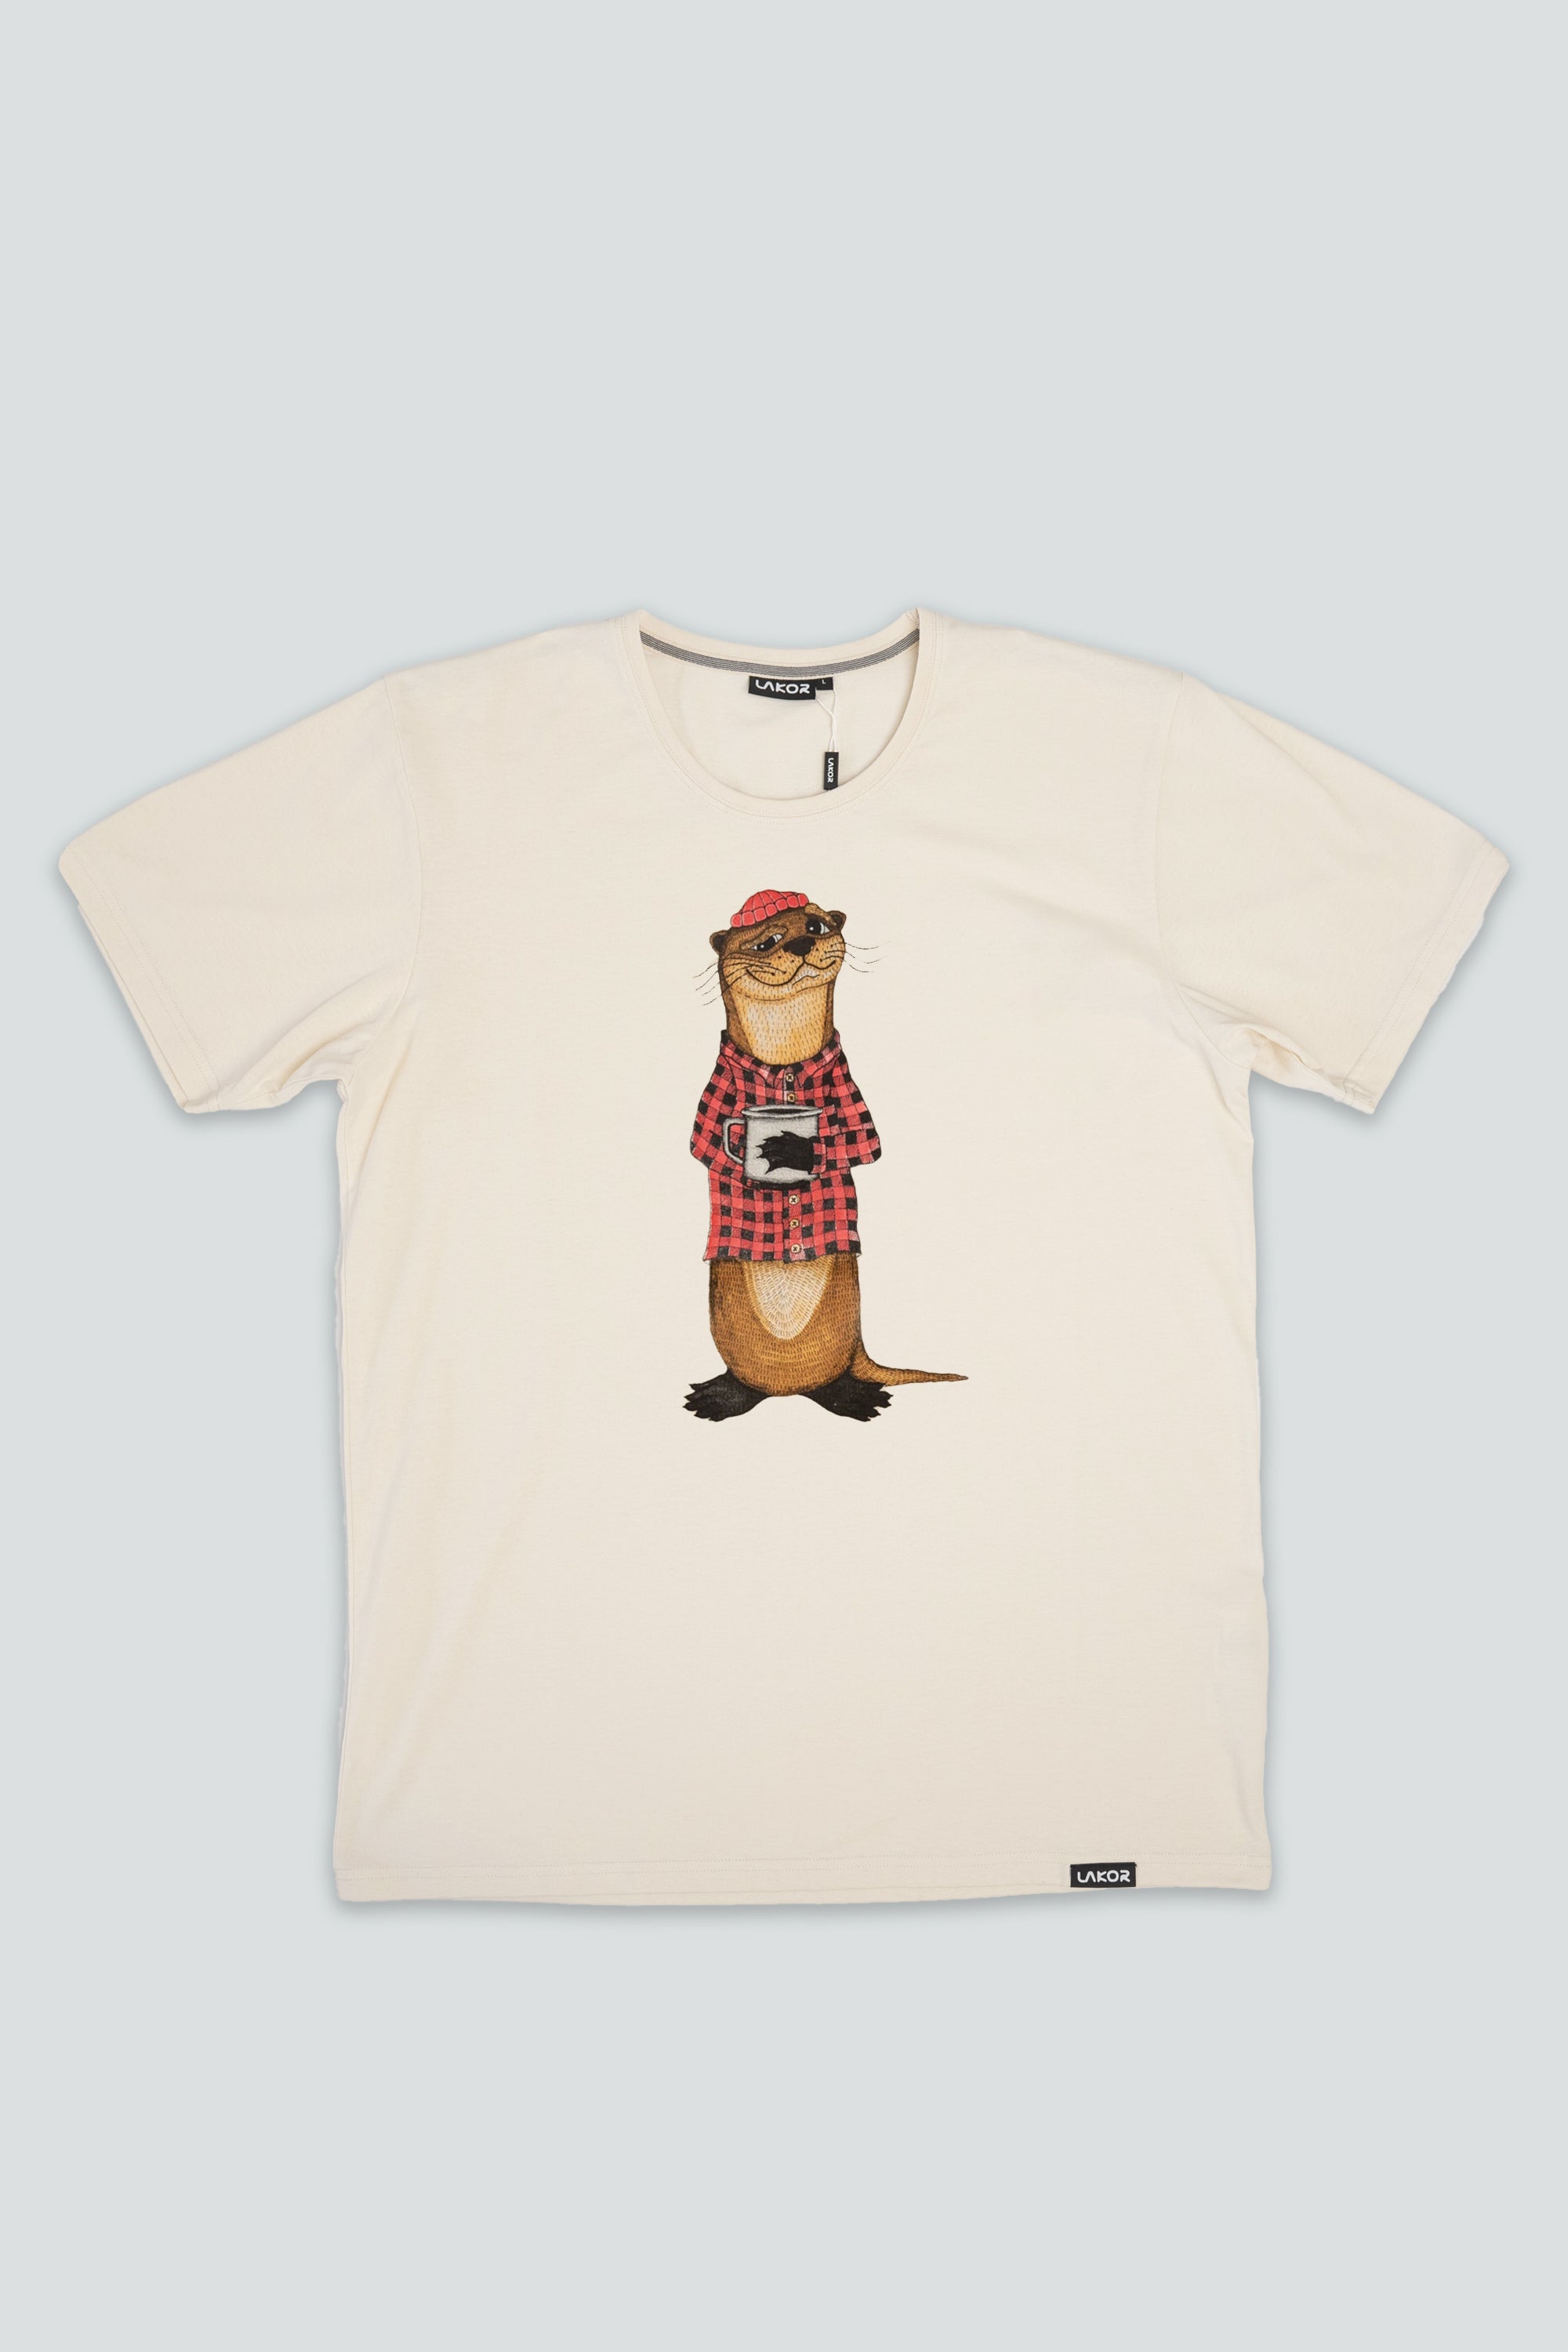 An Otter Coffee T-shirt (Off White)